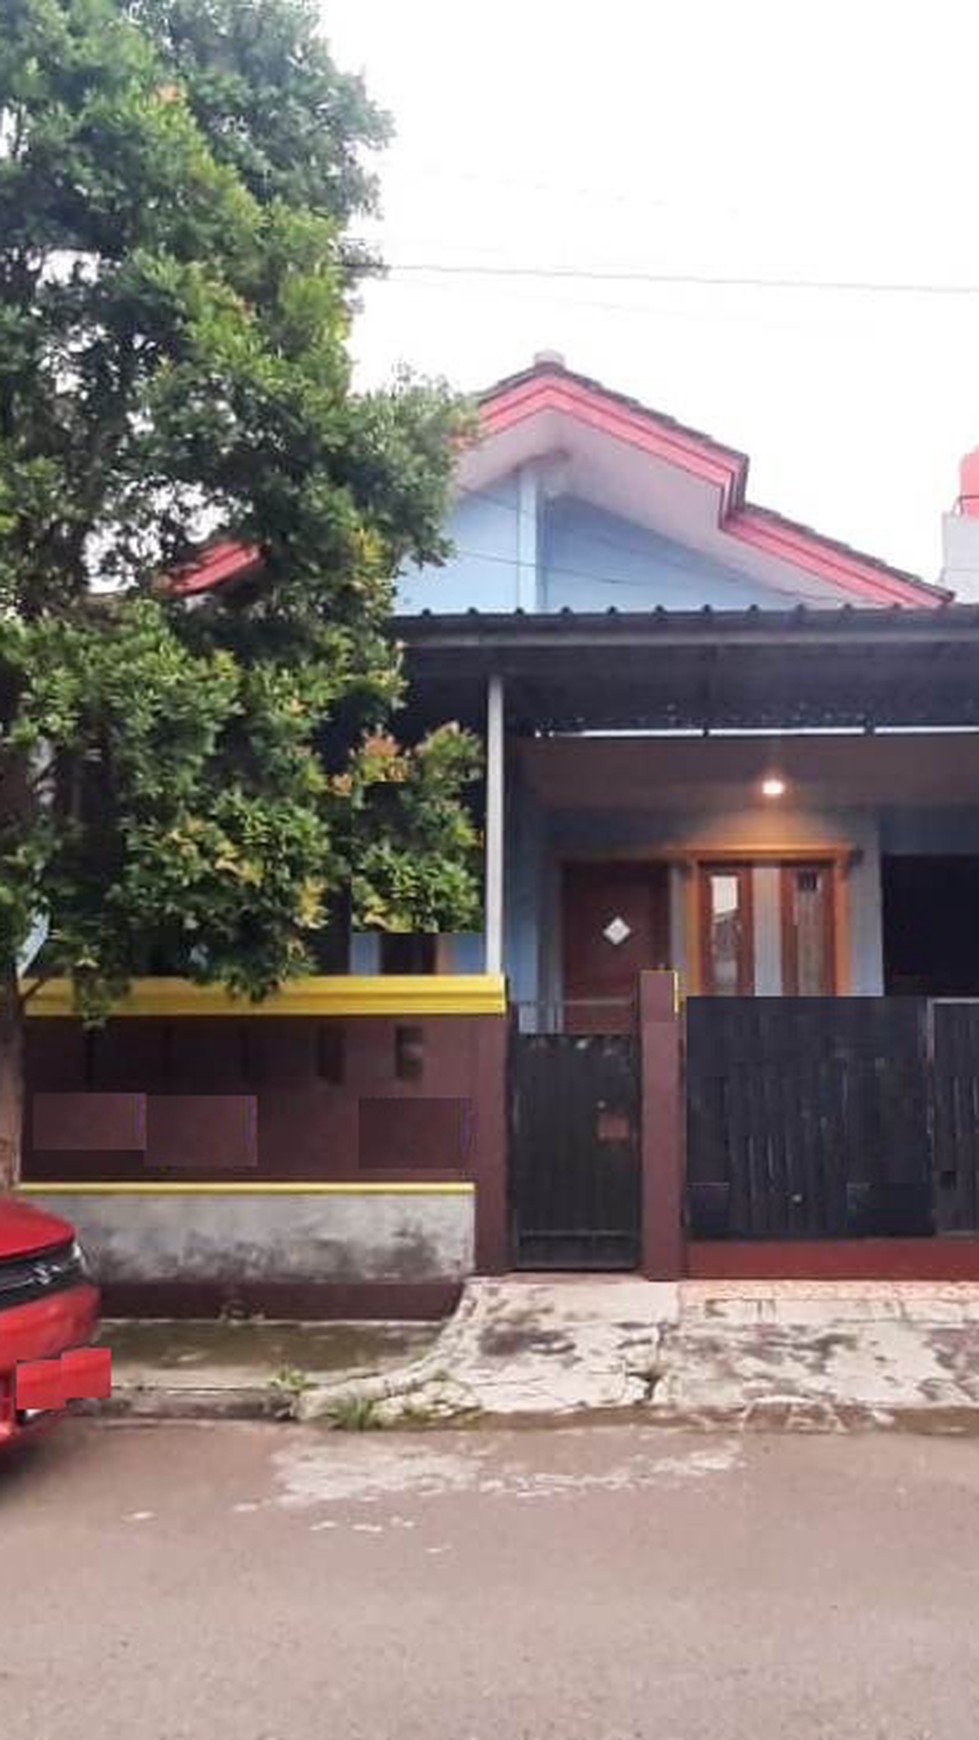 Rumah minimalis, Rapih, bangunan kokoh di Pesanggrahan 